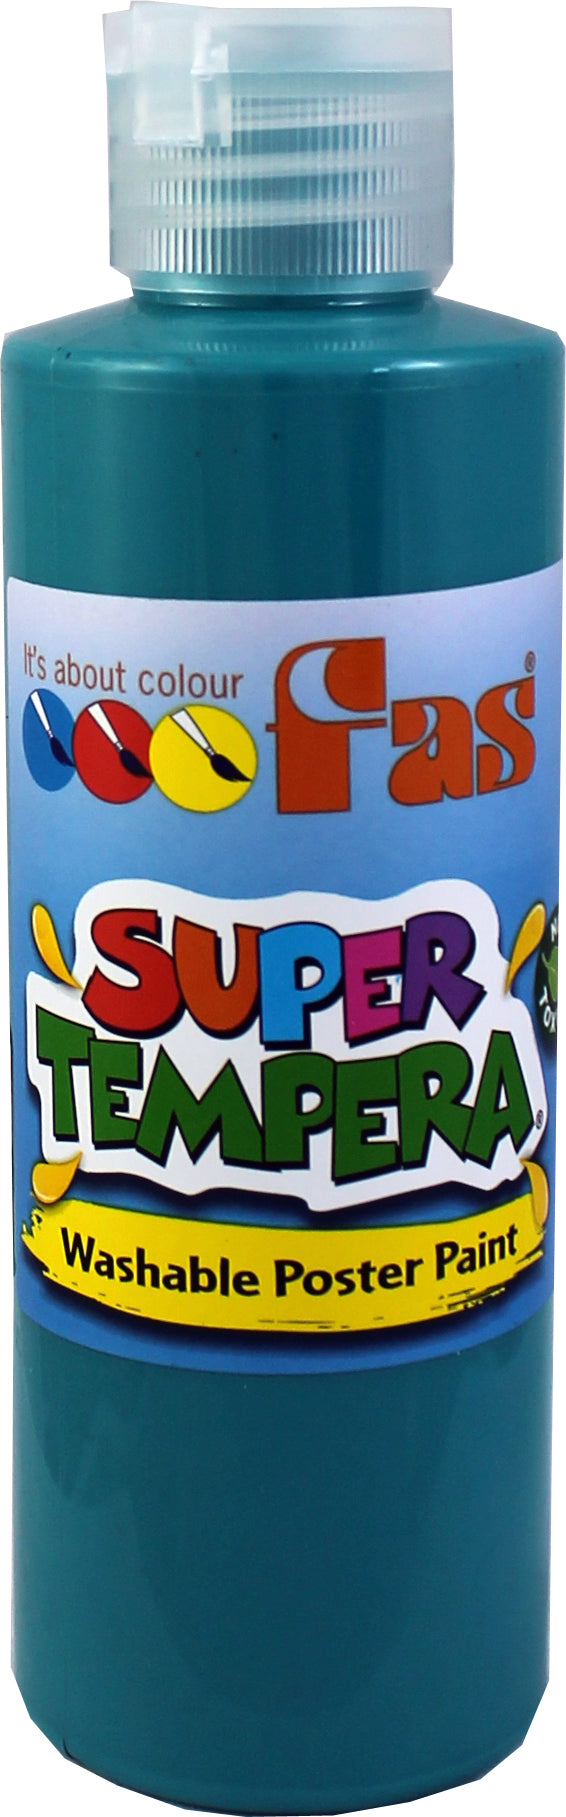 Fas Super Tempera Washable Poster Paints 250ml